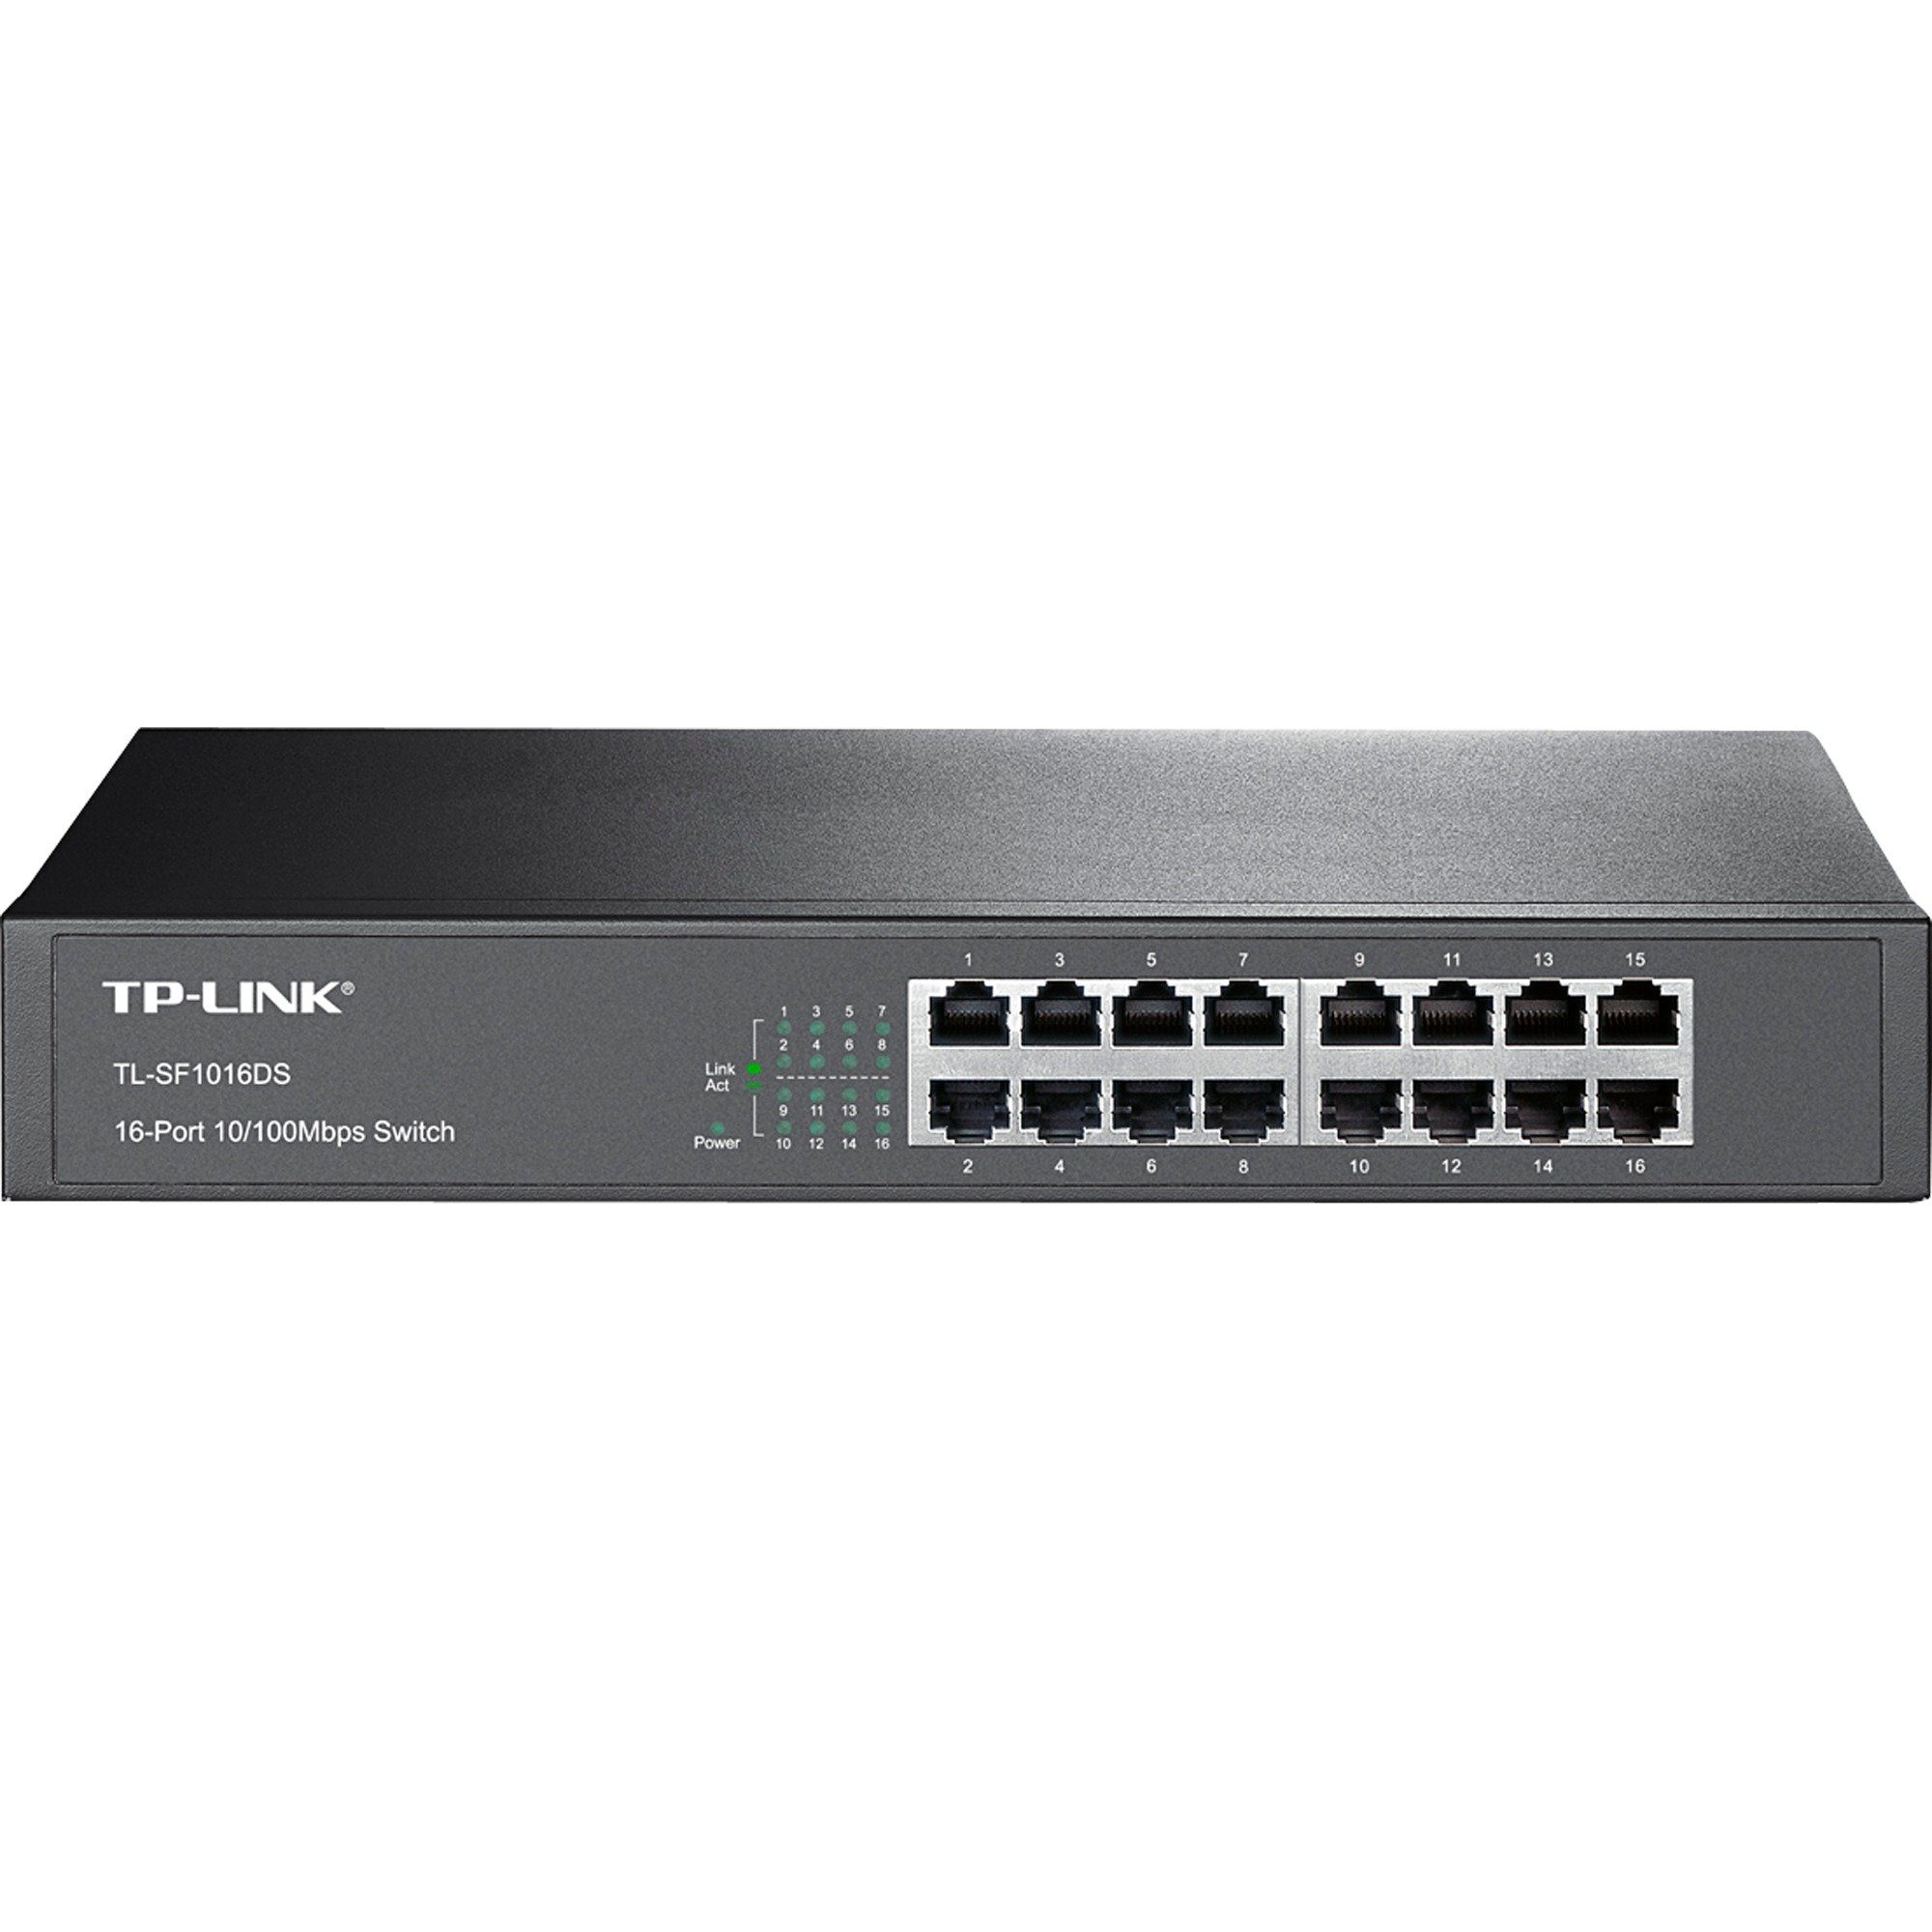 TP-Link TP-Link TL-SF1016DS V3.0, Switch Netzwerk-Switch